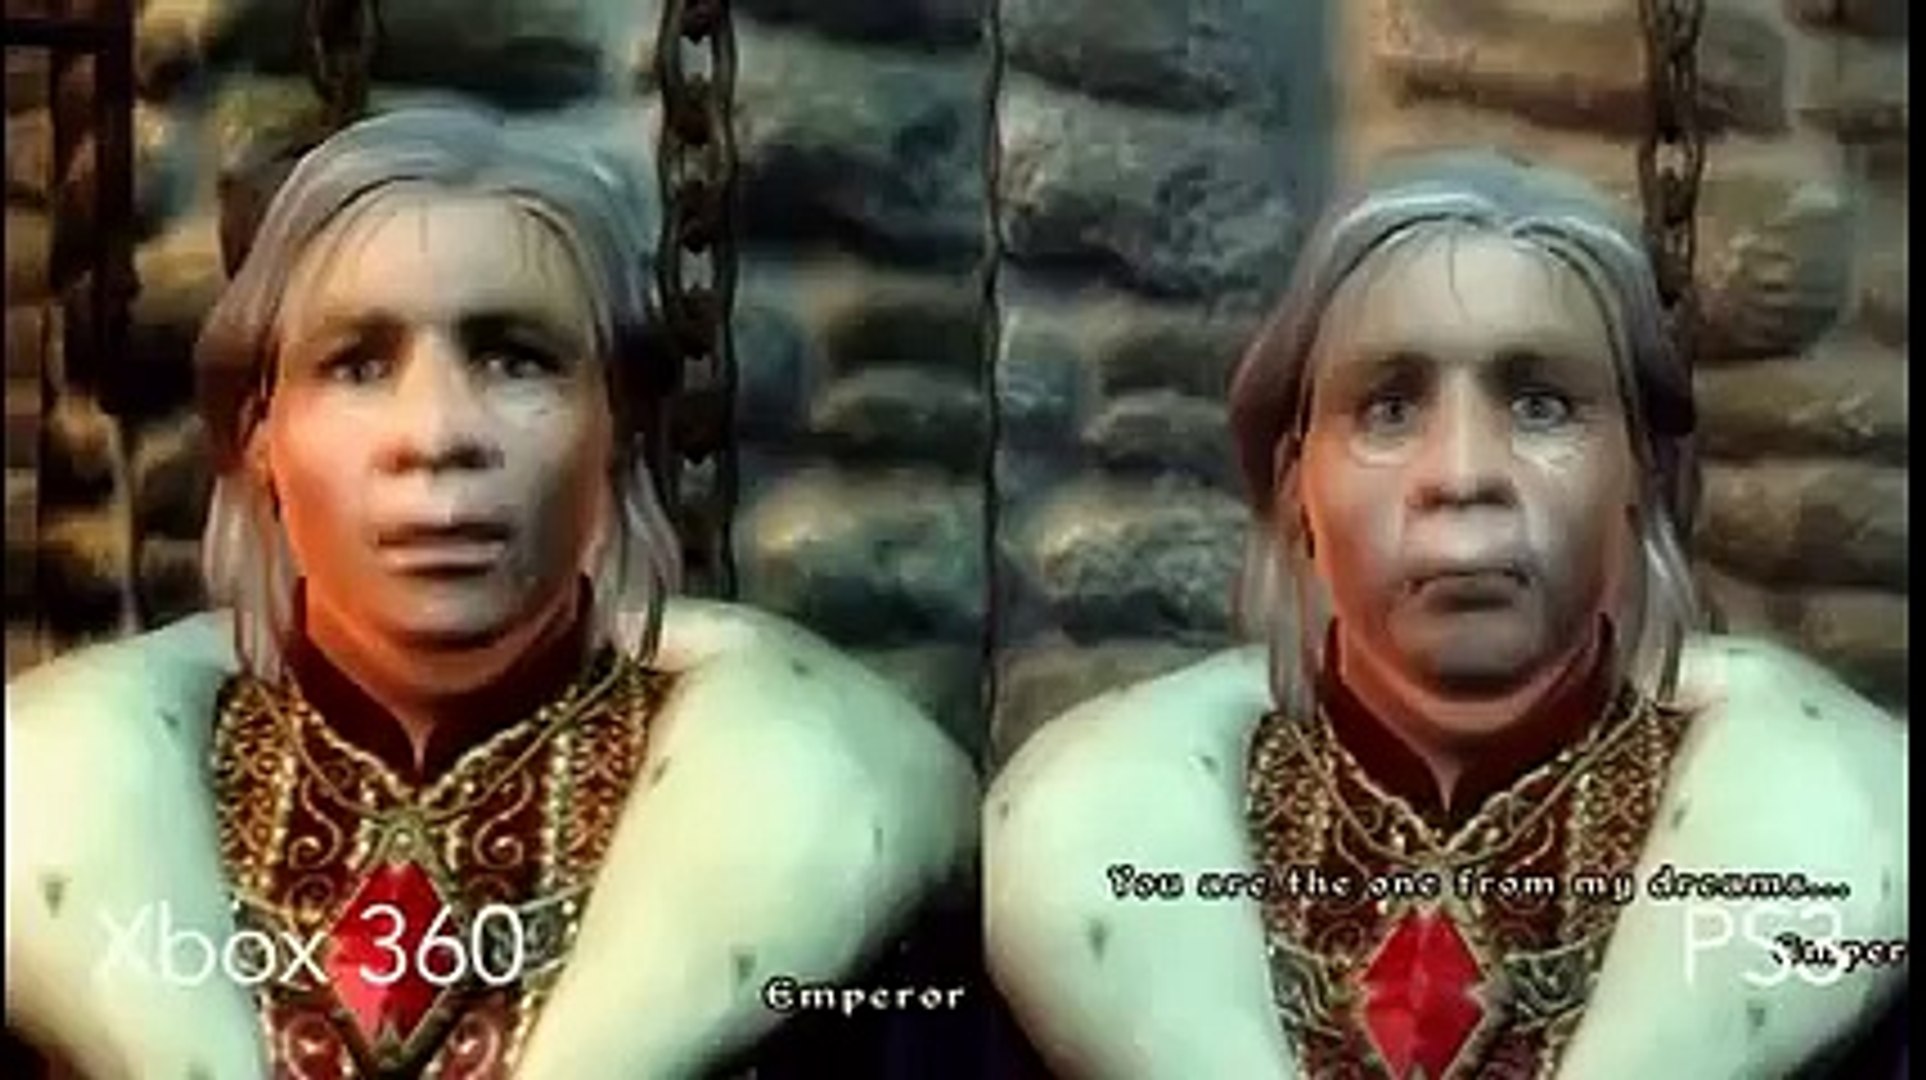 PS3 Vs XBox 360-Elder Scrolls IV:Oblivion - video Dailymotion